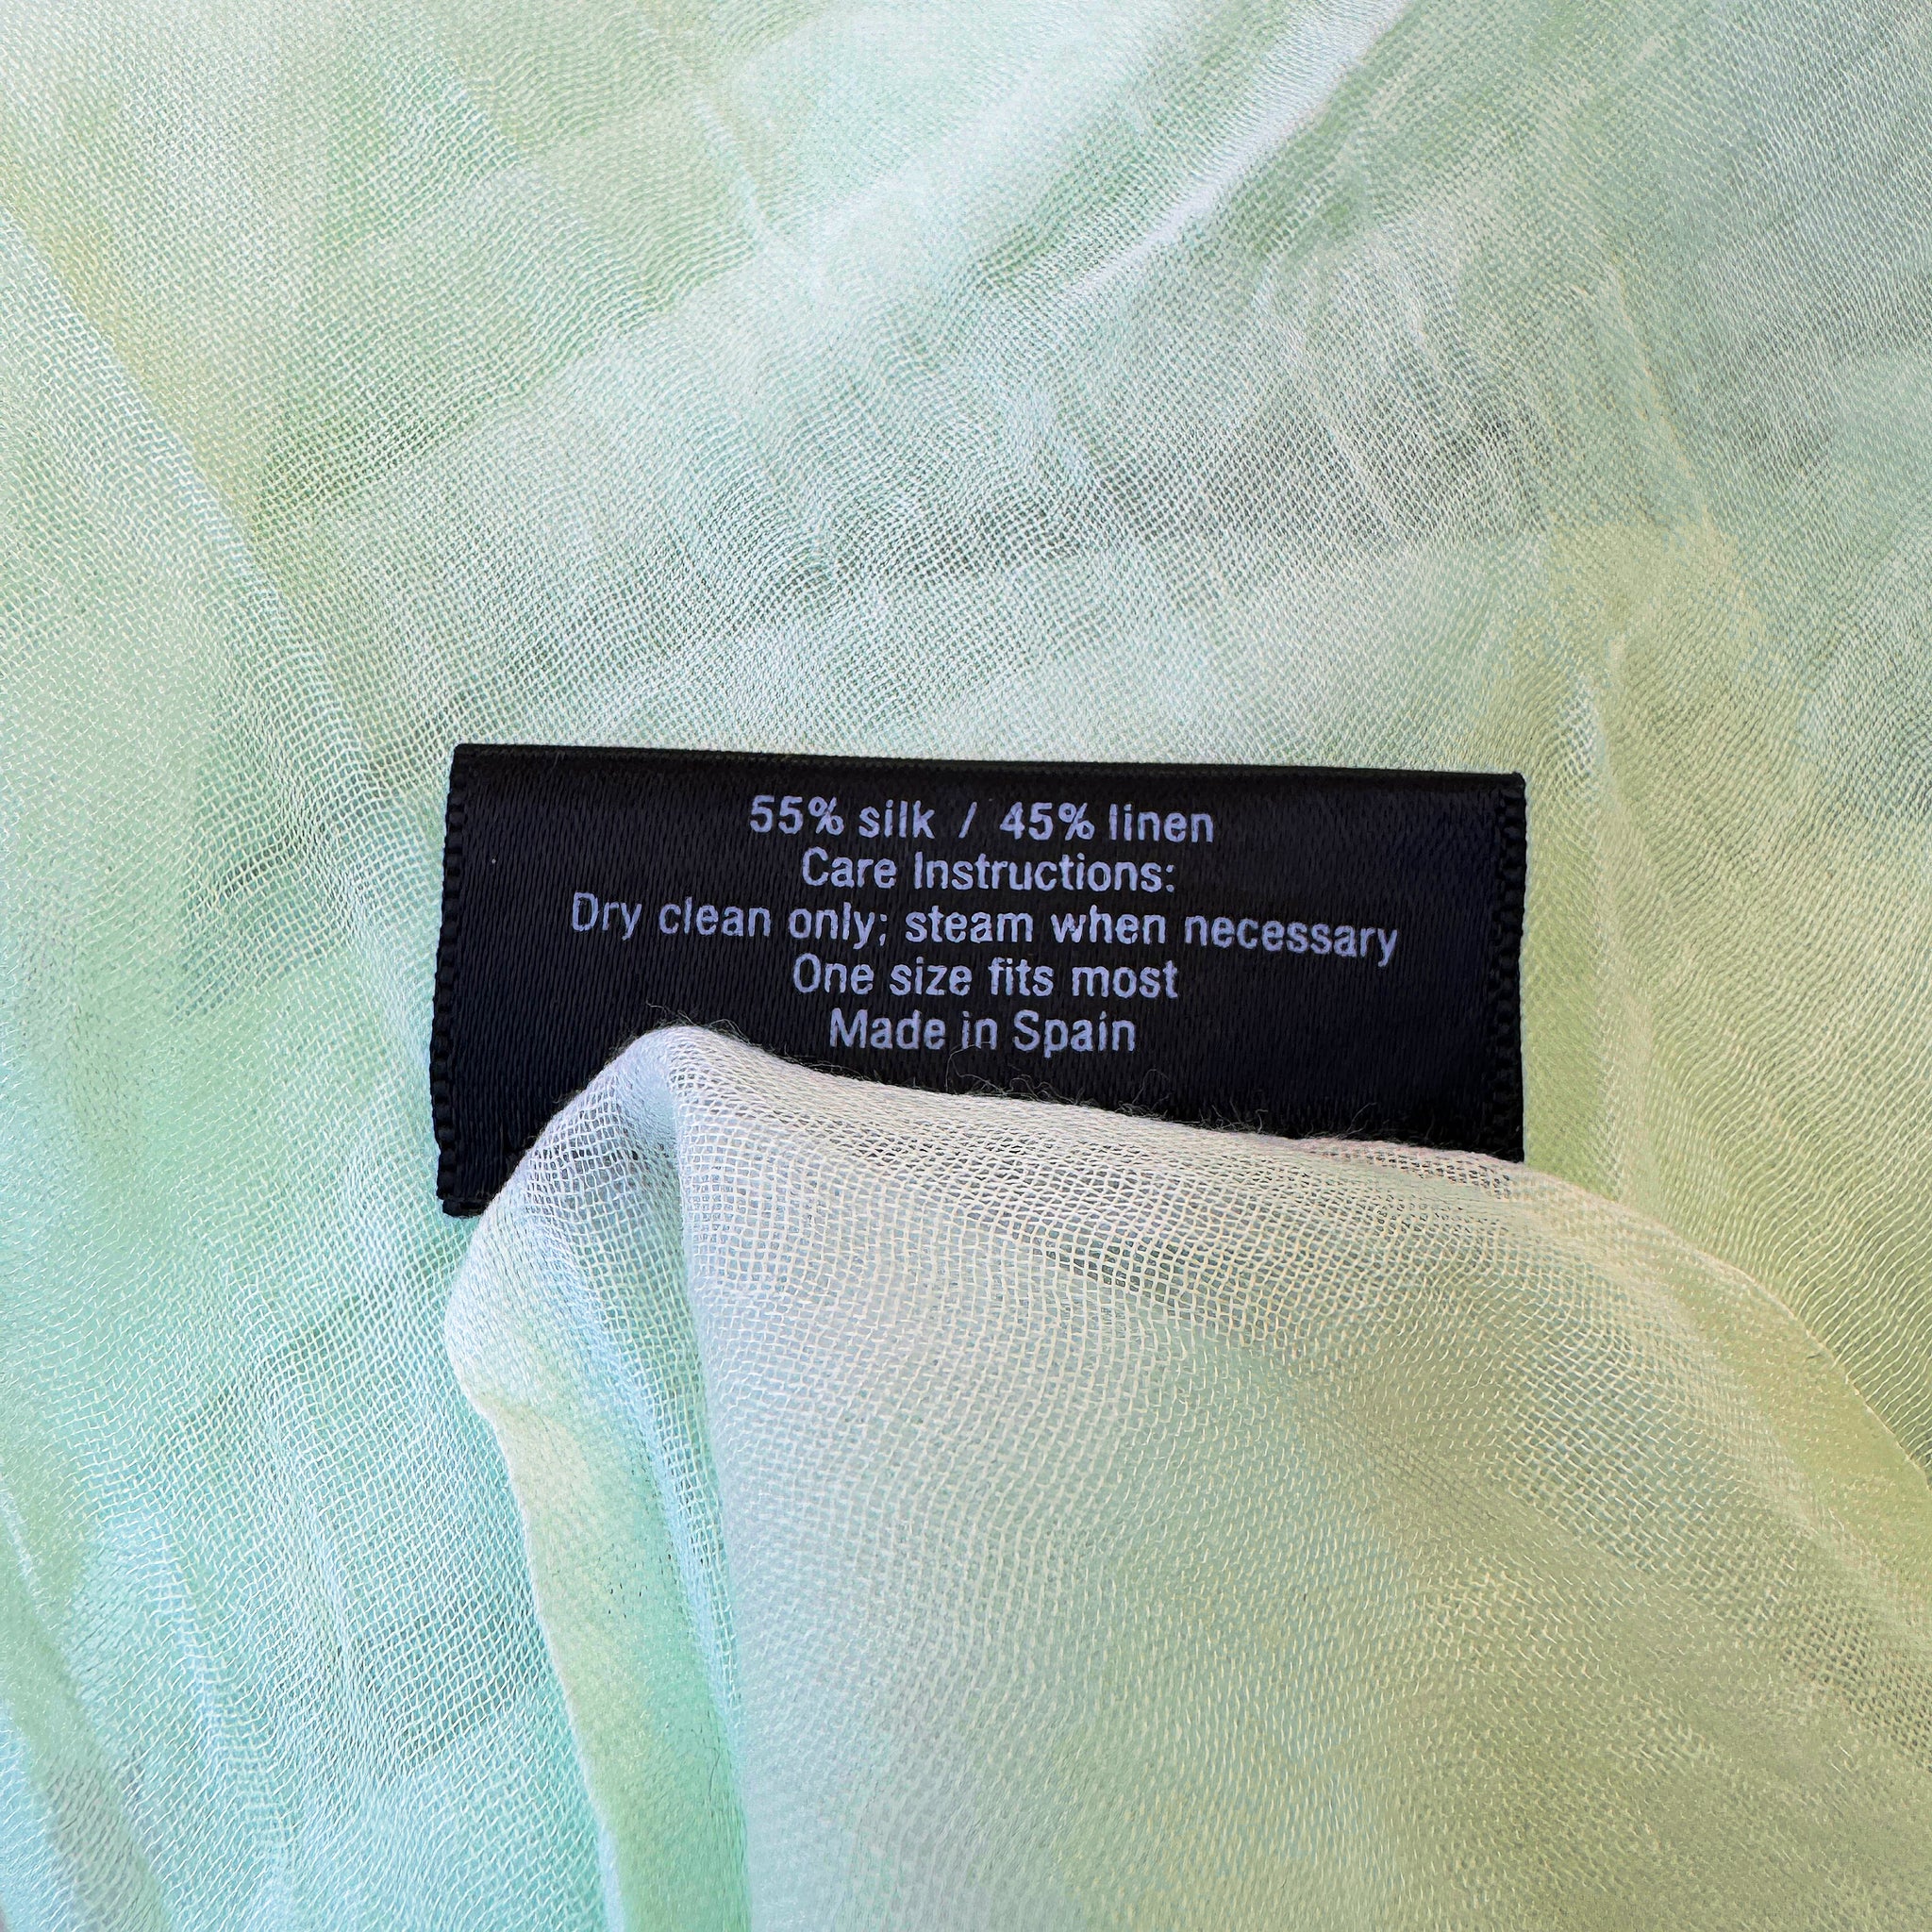 Blue Pacific Tissue Solid Silk Linen Lightweight Scarf in Bright Celadon Green